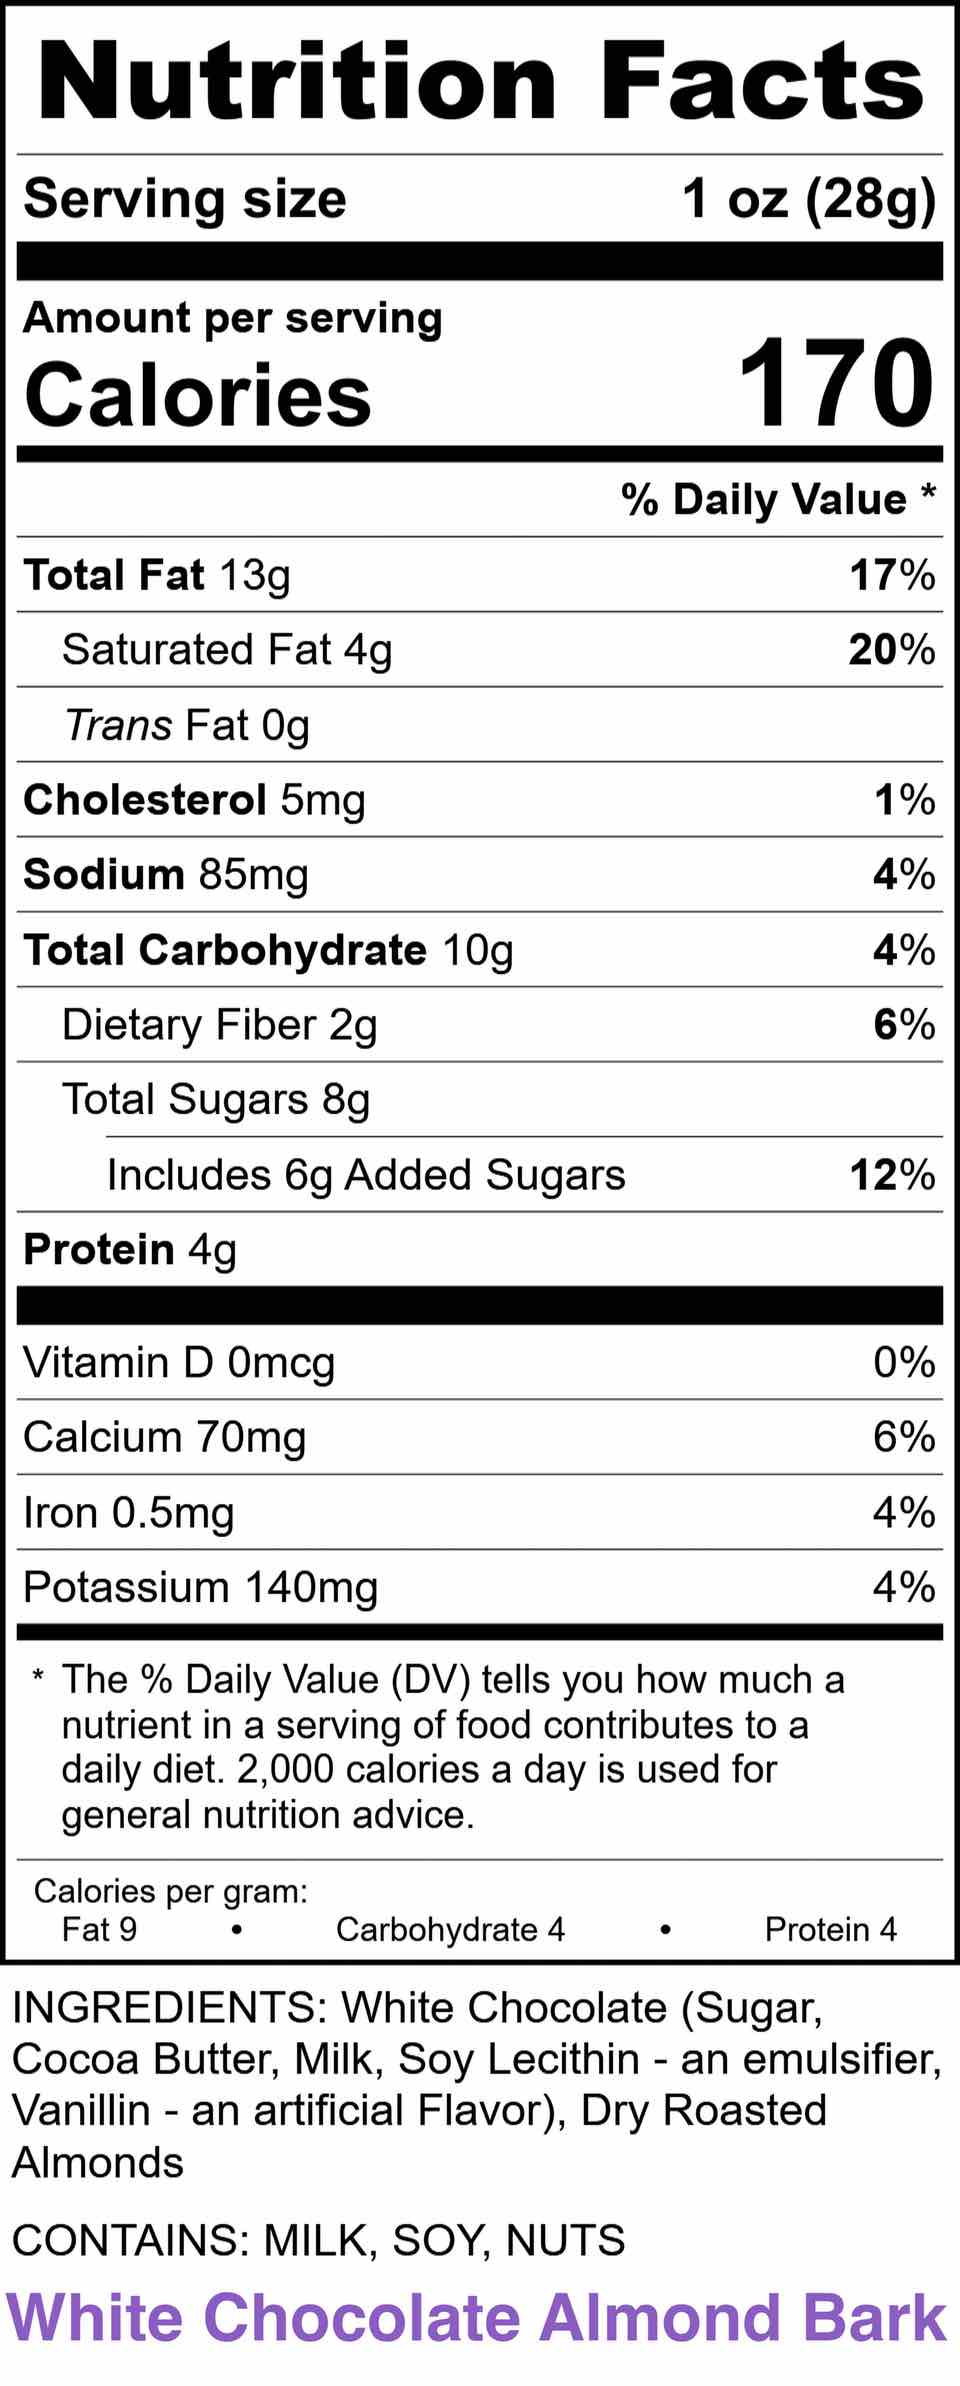 WHITE ALMOND BARK: 
INGREDIENTS: White Chocolate (Sugar, Cocoa Butter, Milk, Soy Lecithin, Vanillin), Dry Roasted Almonds CONTAINS: MILK, SOY, NUTS

Li-Lac Chocolates Nutrition Label Report Almond Bark - White Chocolate Nutrition Facts Servings: 1, Serv. Size: 1 oz (28g), Amount per serving: Calories 170, Total Fat 13g (17% DV), Sat. Fat 4g (20% DV), Trans Fat 0g, Cholest. 5mg (1% DV), Sodium 85mg (4% DV), Total Carb. 10g (4% DV), Fiber 2g (6% DV), Total Sugars 8g (Incl. 6g Added Sugars, 12% DV), Protein 4g, Vit. D 0mcg (0% DV), Calcium 70mg (6% DV), Iron 0.5mg (4% DV), Potas. 140mg (4% DV).  